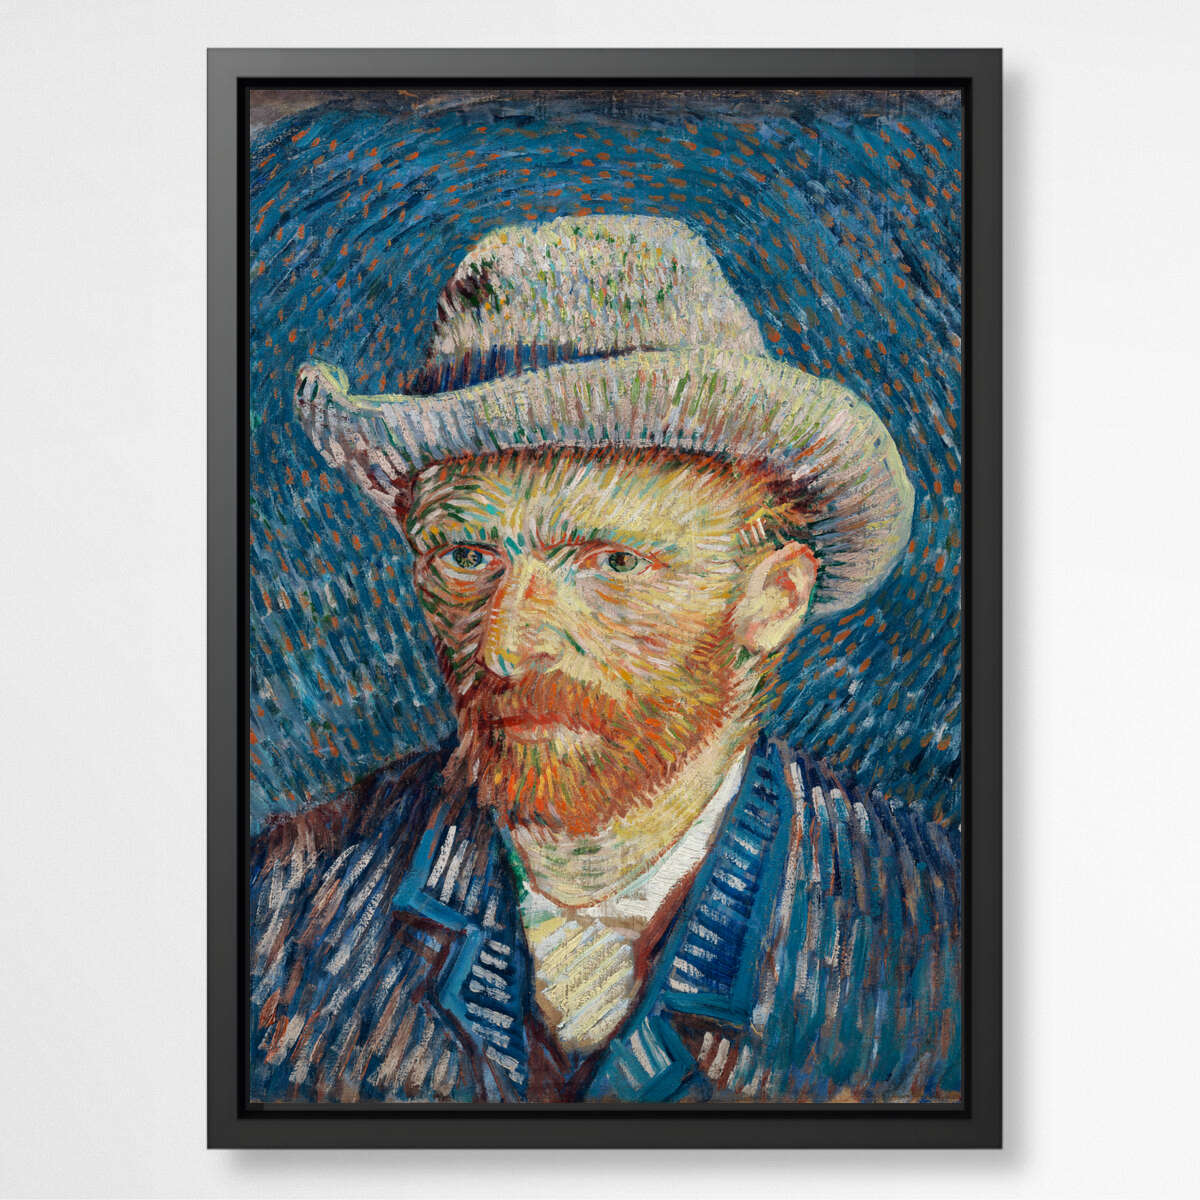 Vincent Van Gogh's Self-Portrait with Grey Felt Hat | Famous Paintings Wall Art Prints - The Canvas Hive